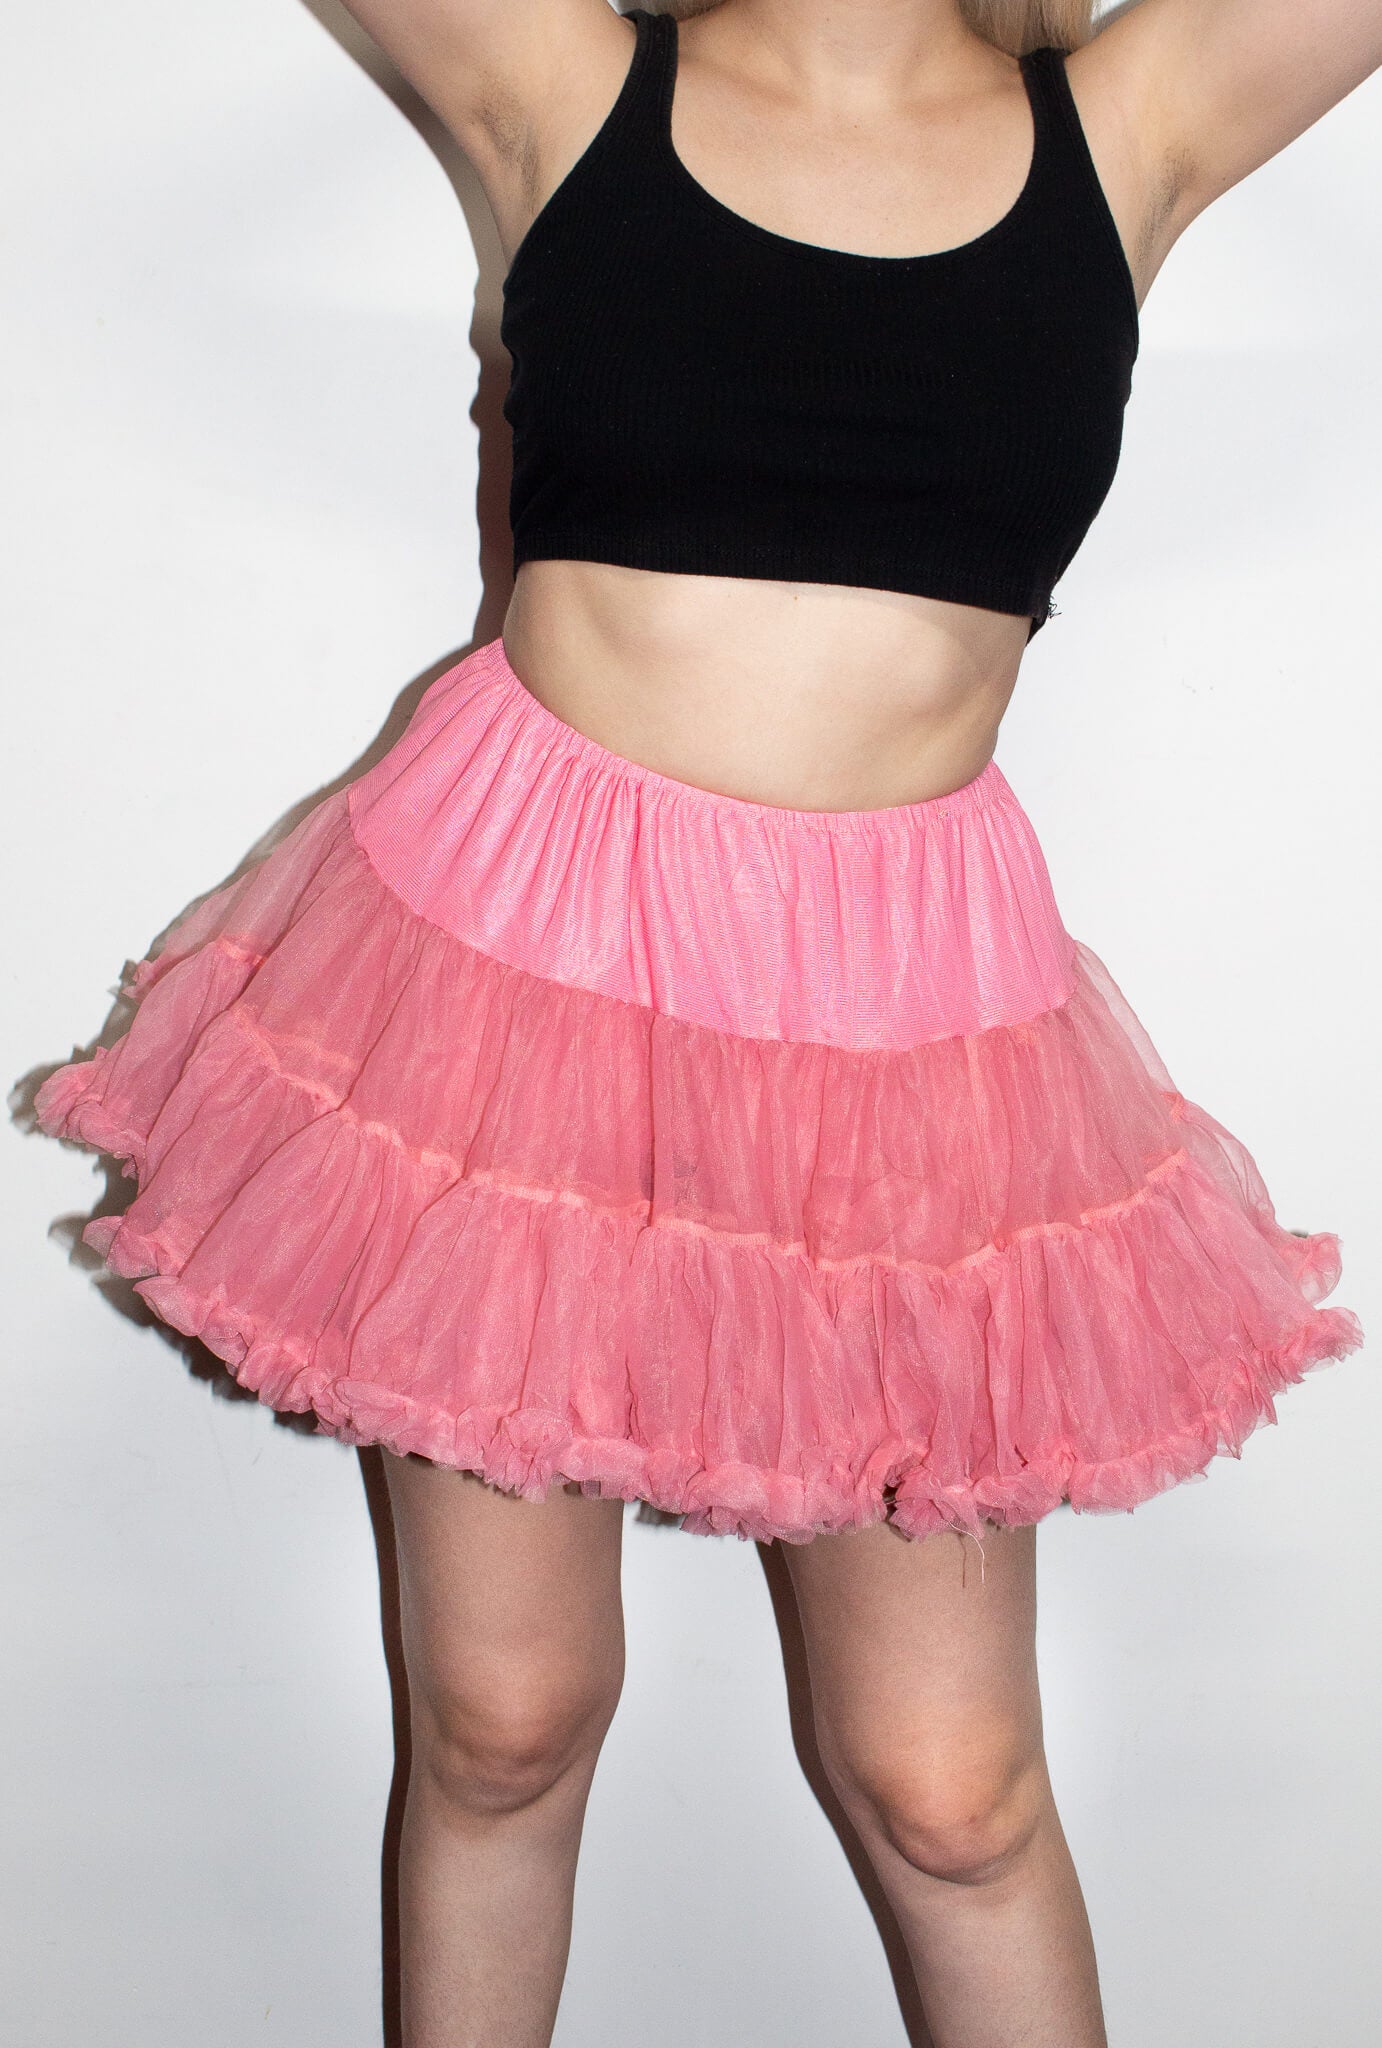 Deluxe Blush Pink Petticoat